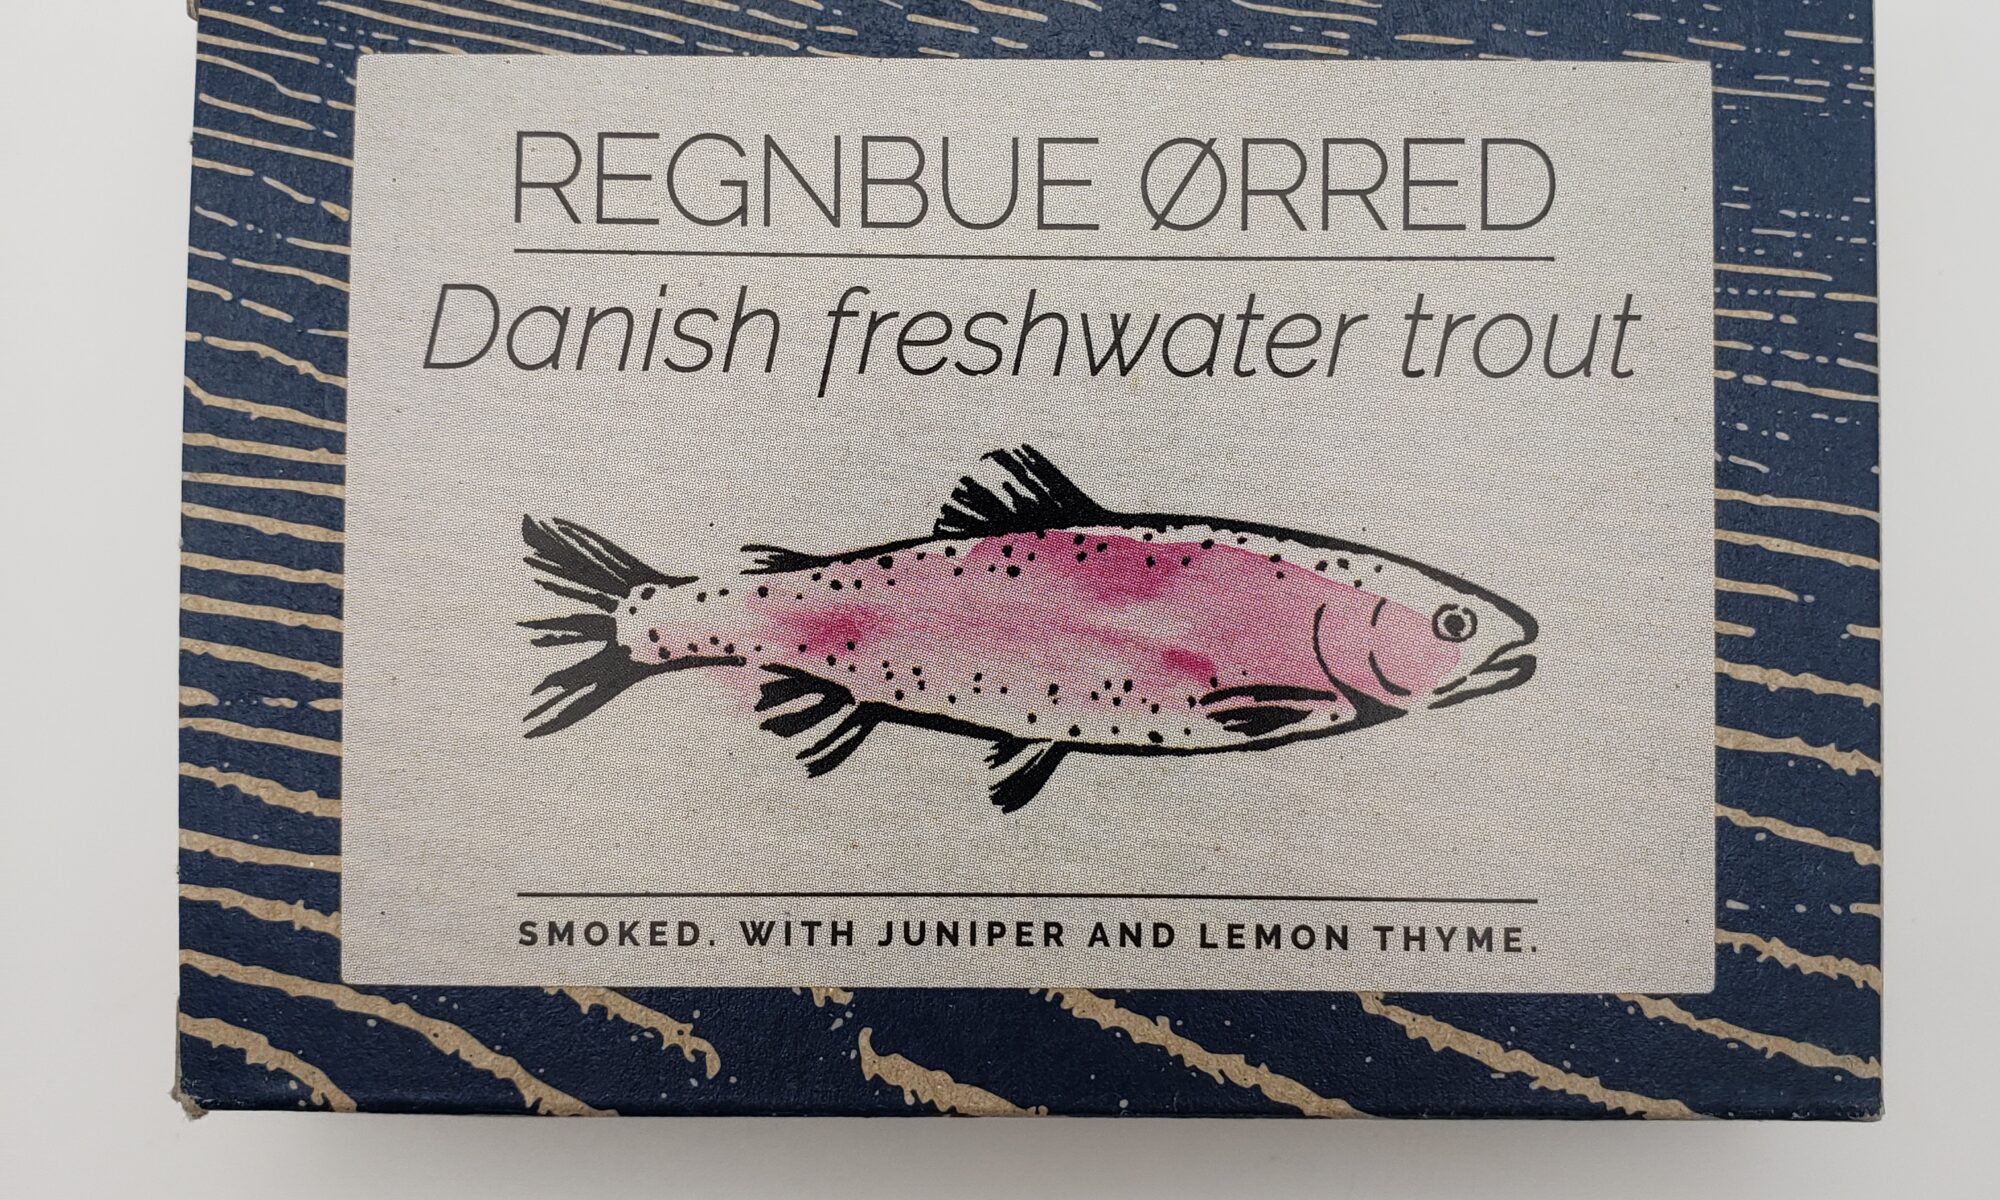 Image of Fangst danish freshwater trout